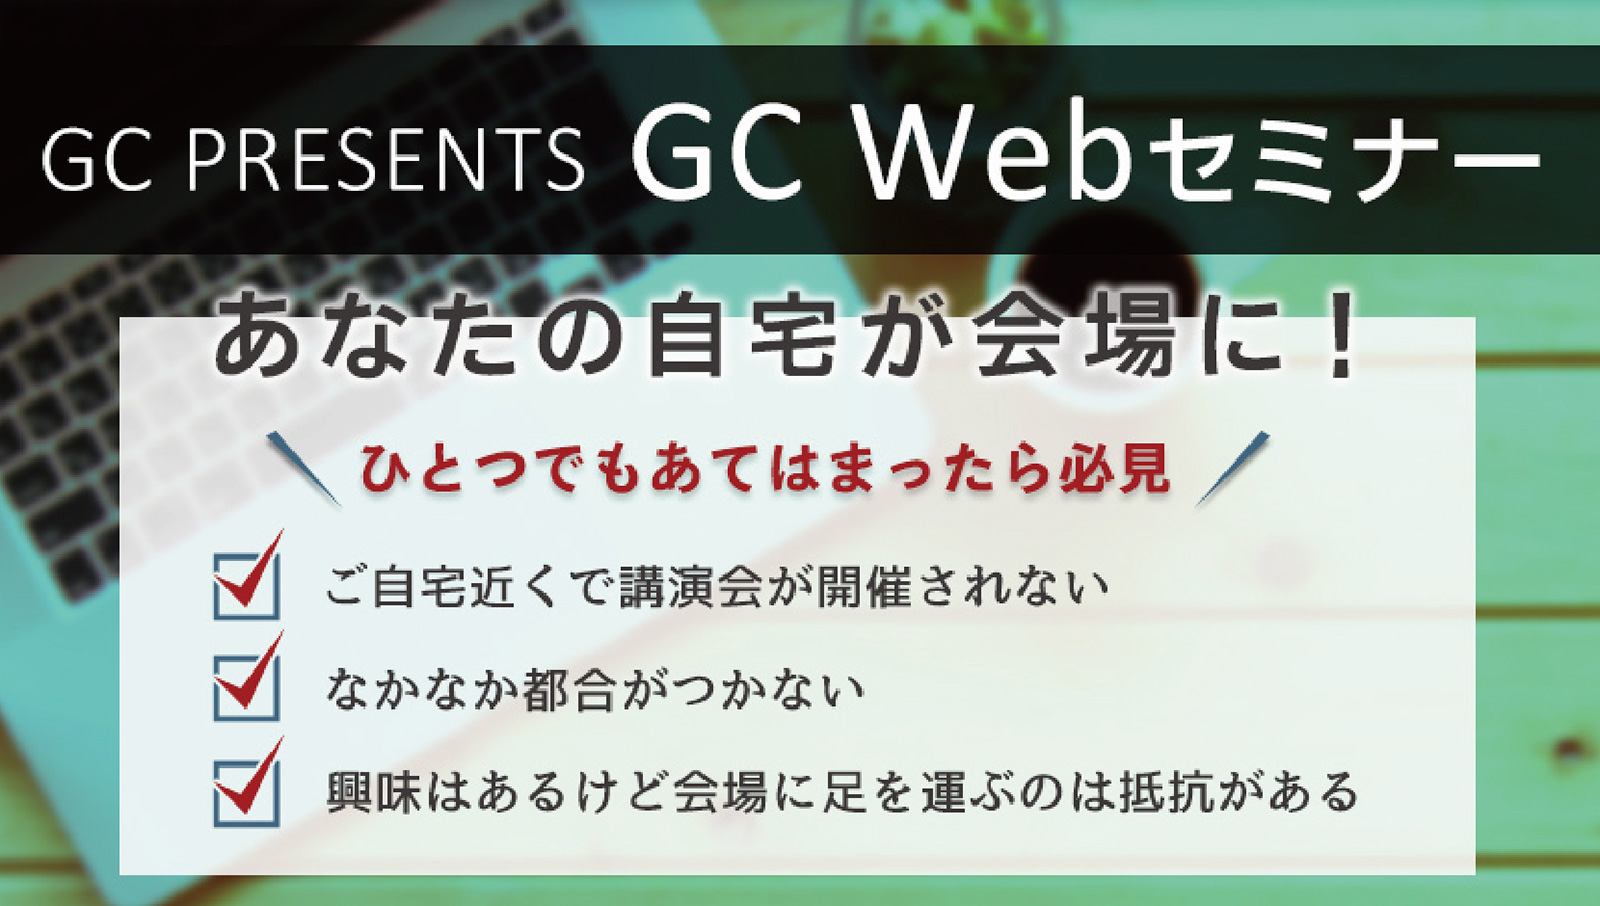 GC PRESENTS Webセミナー